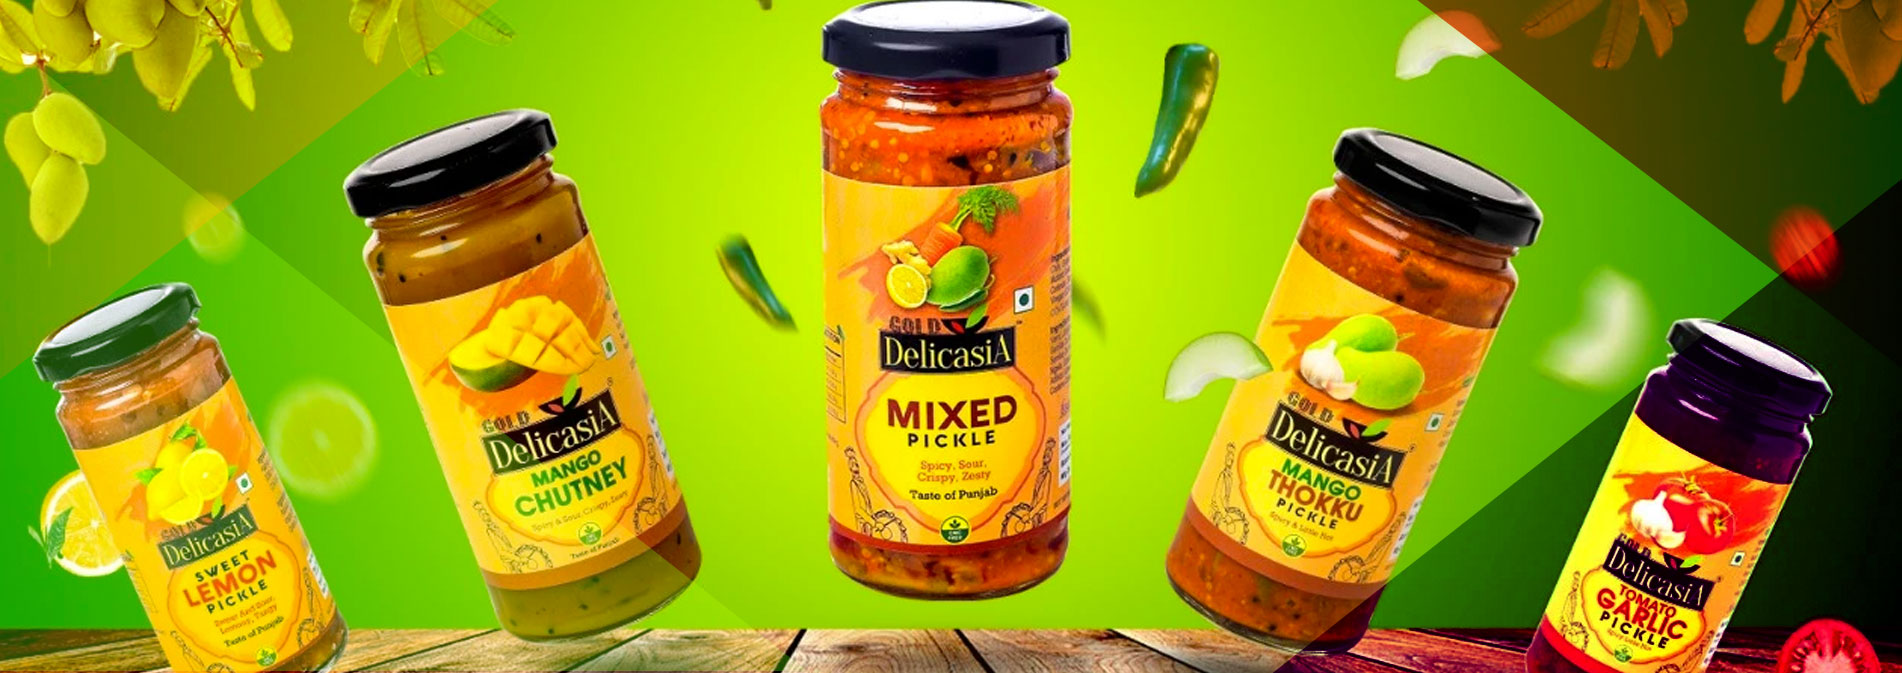 pickles-label-packaging